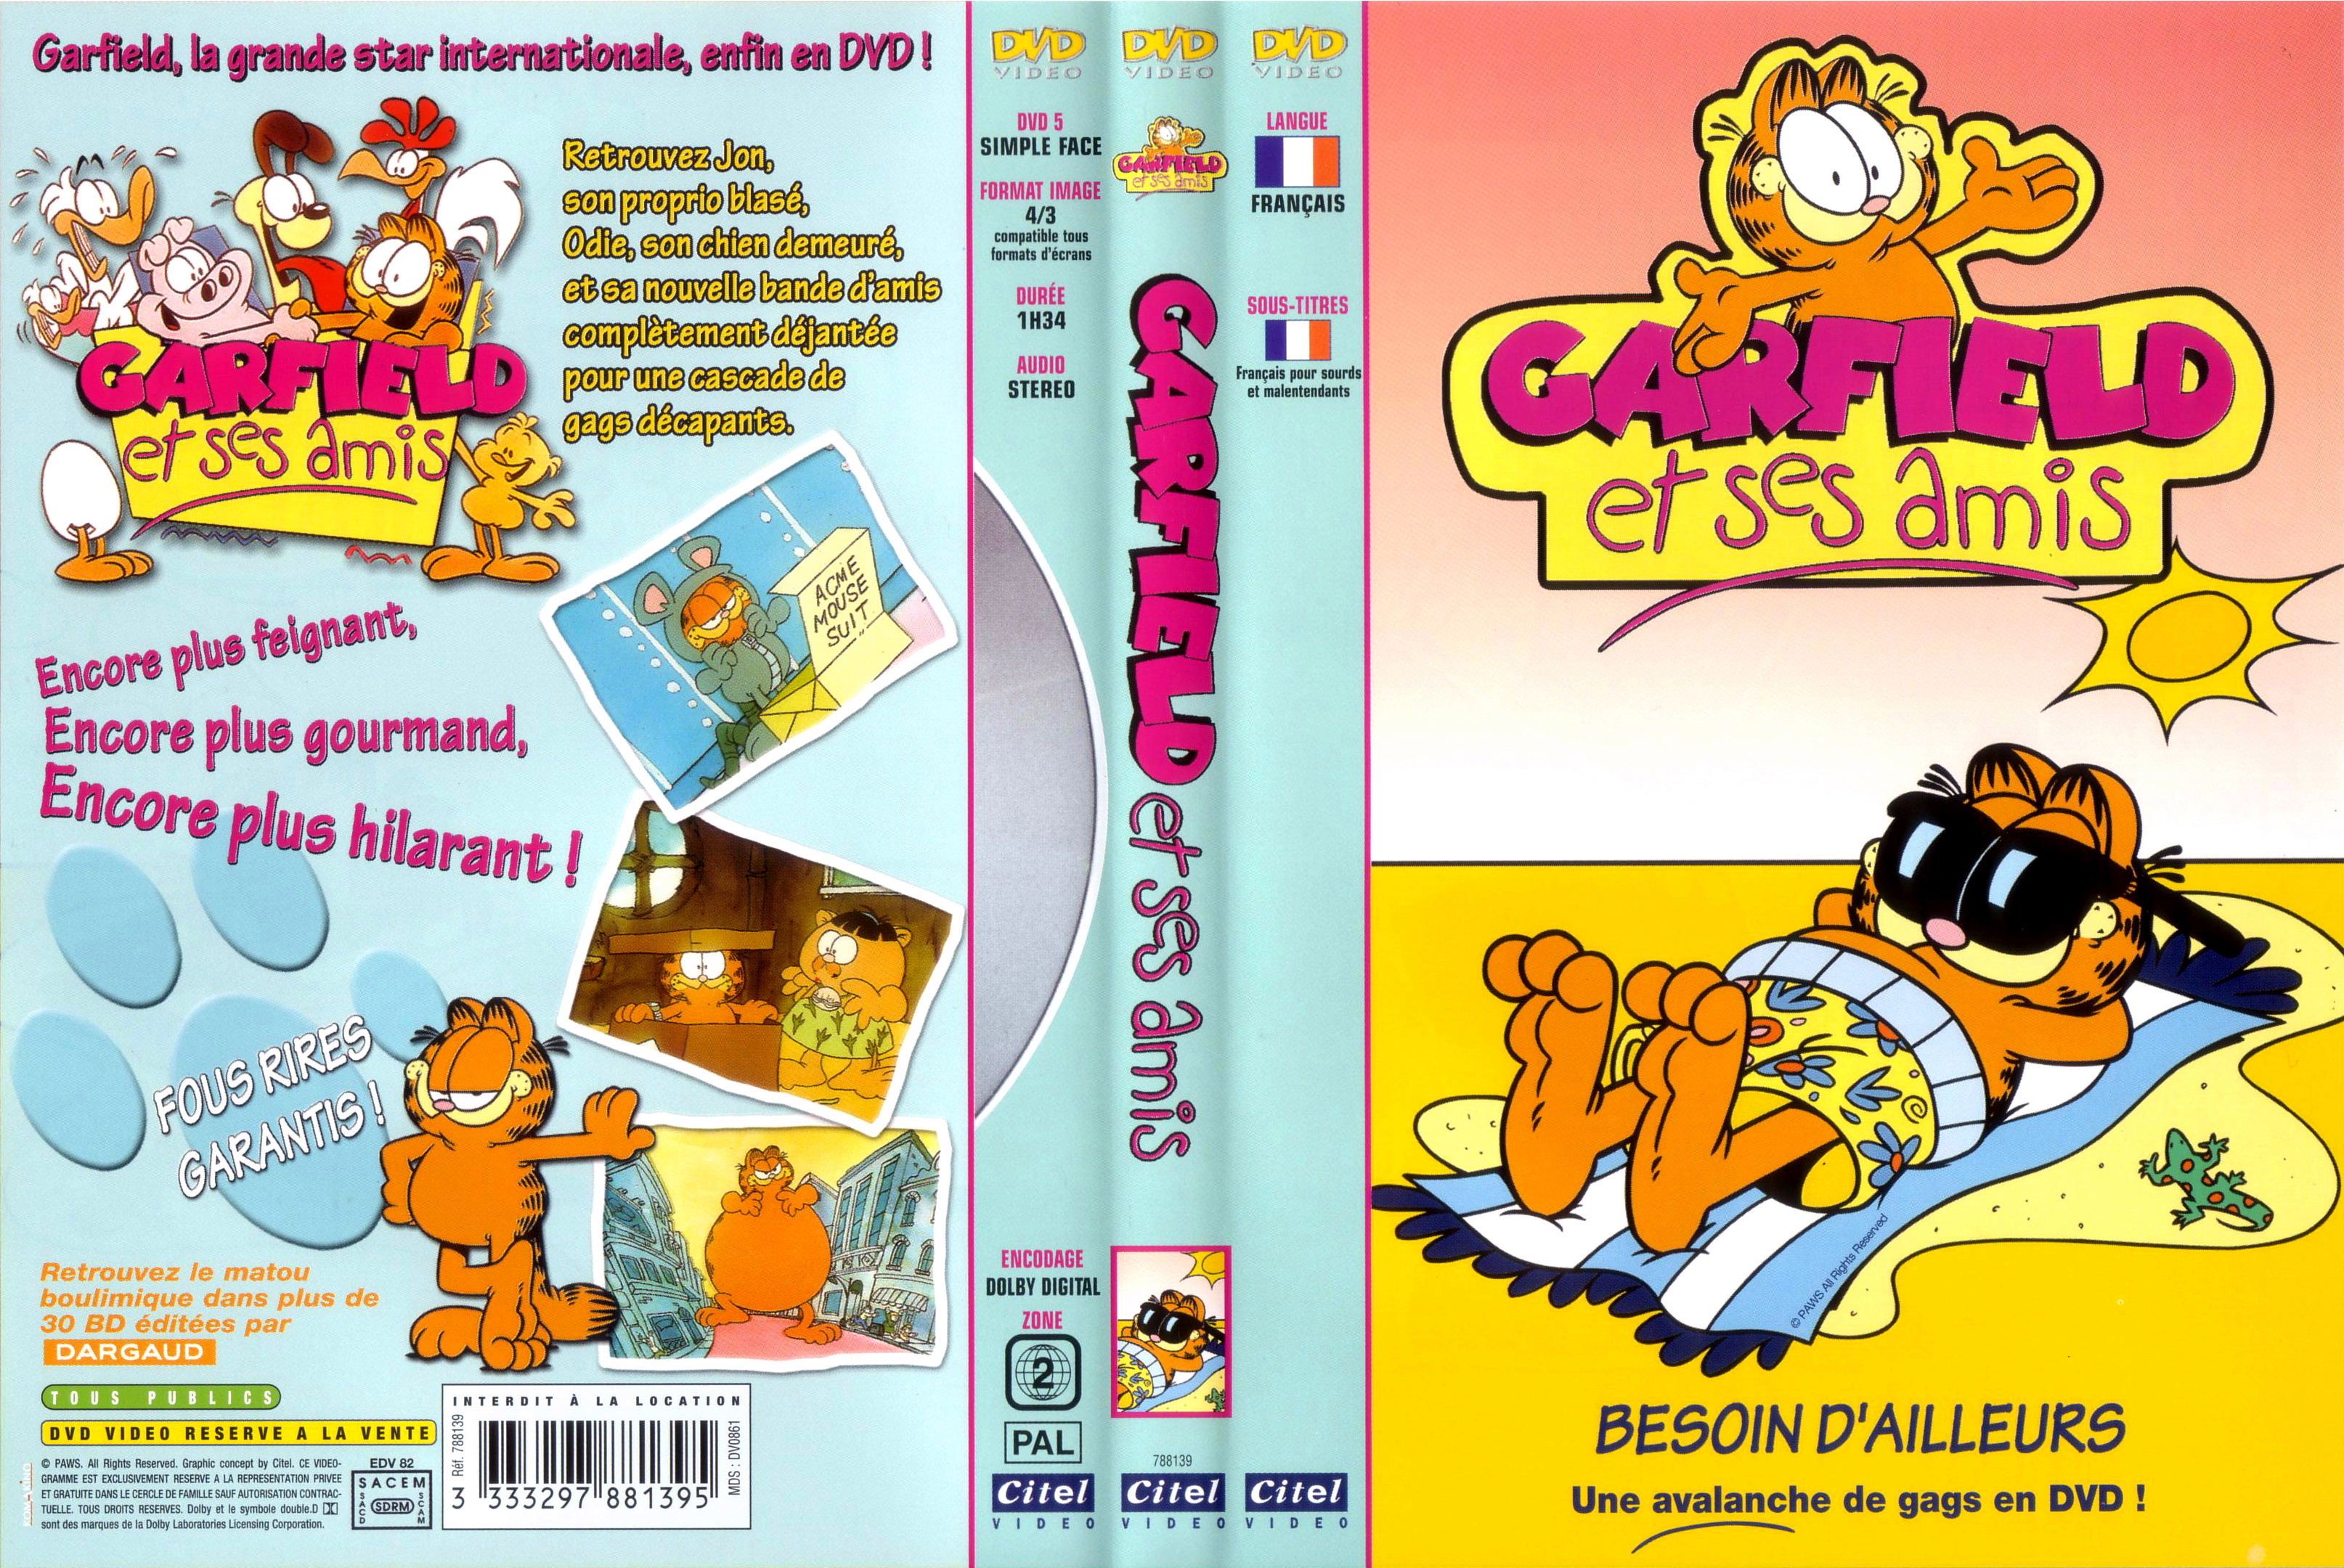 Jaquette DVD Garfield et ses amis - besoin d